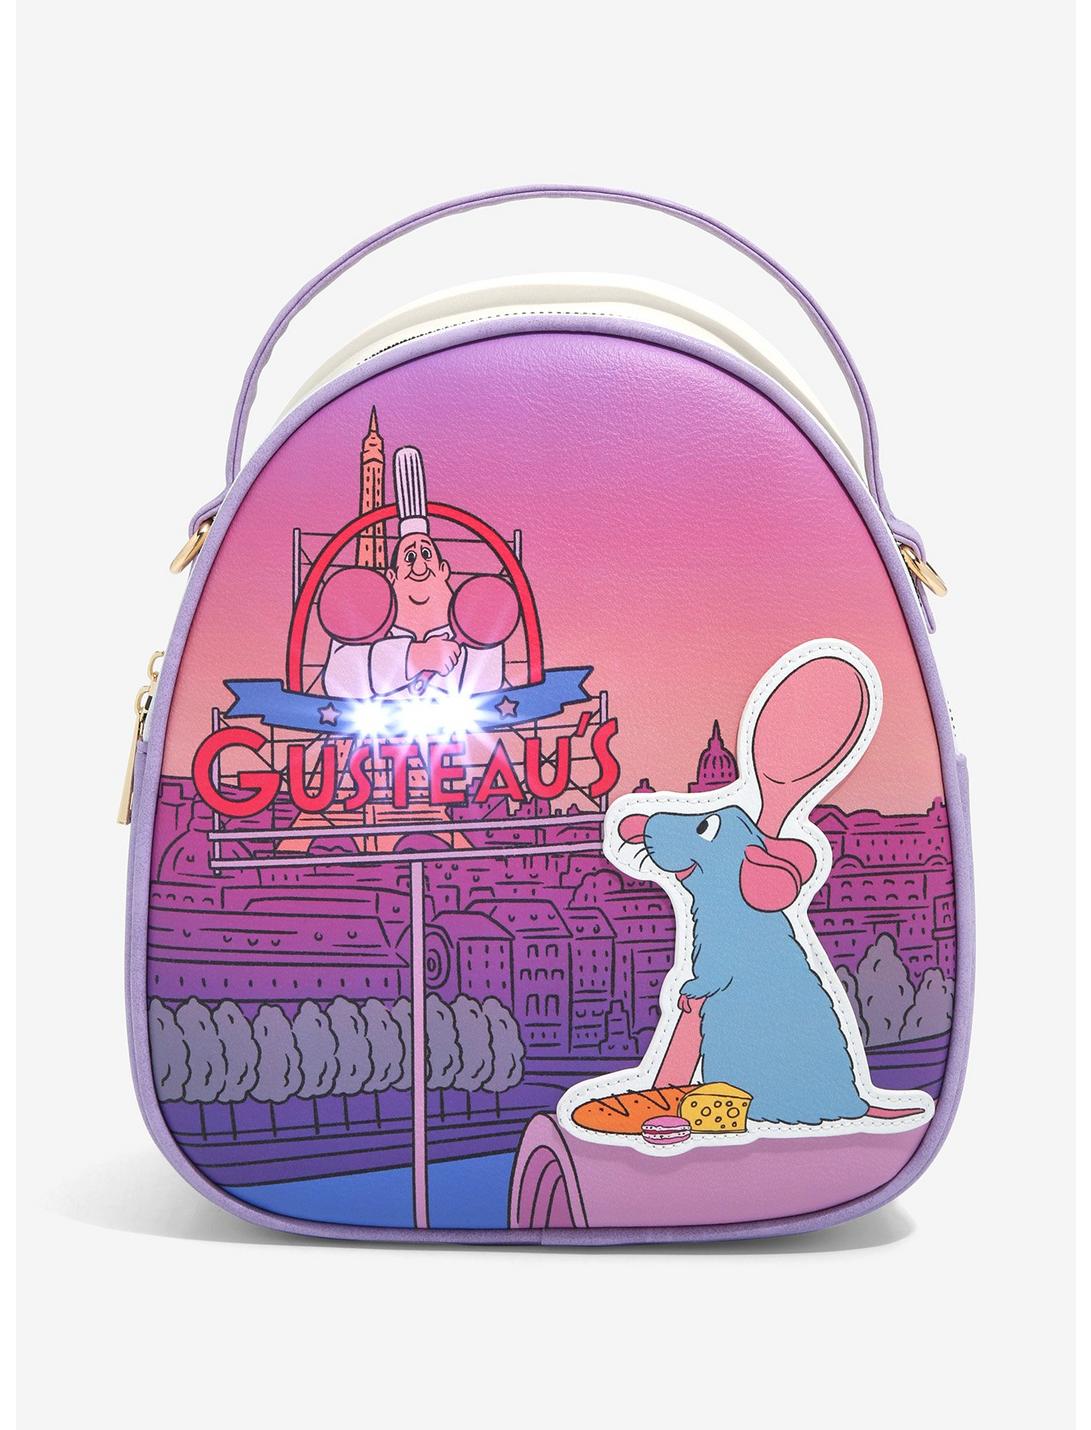 Disney Pixar Ratatouille Paris Scenic Light-Up Convertible Mini Backpack - BoxLunch Exclusive, , hi-res